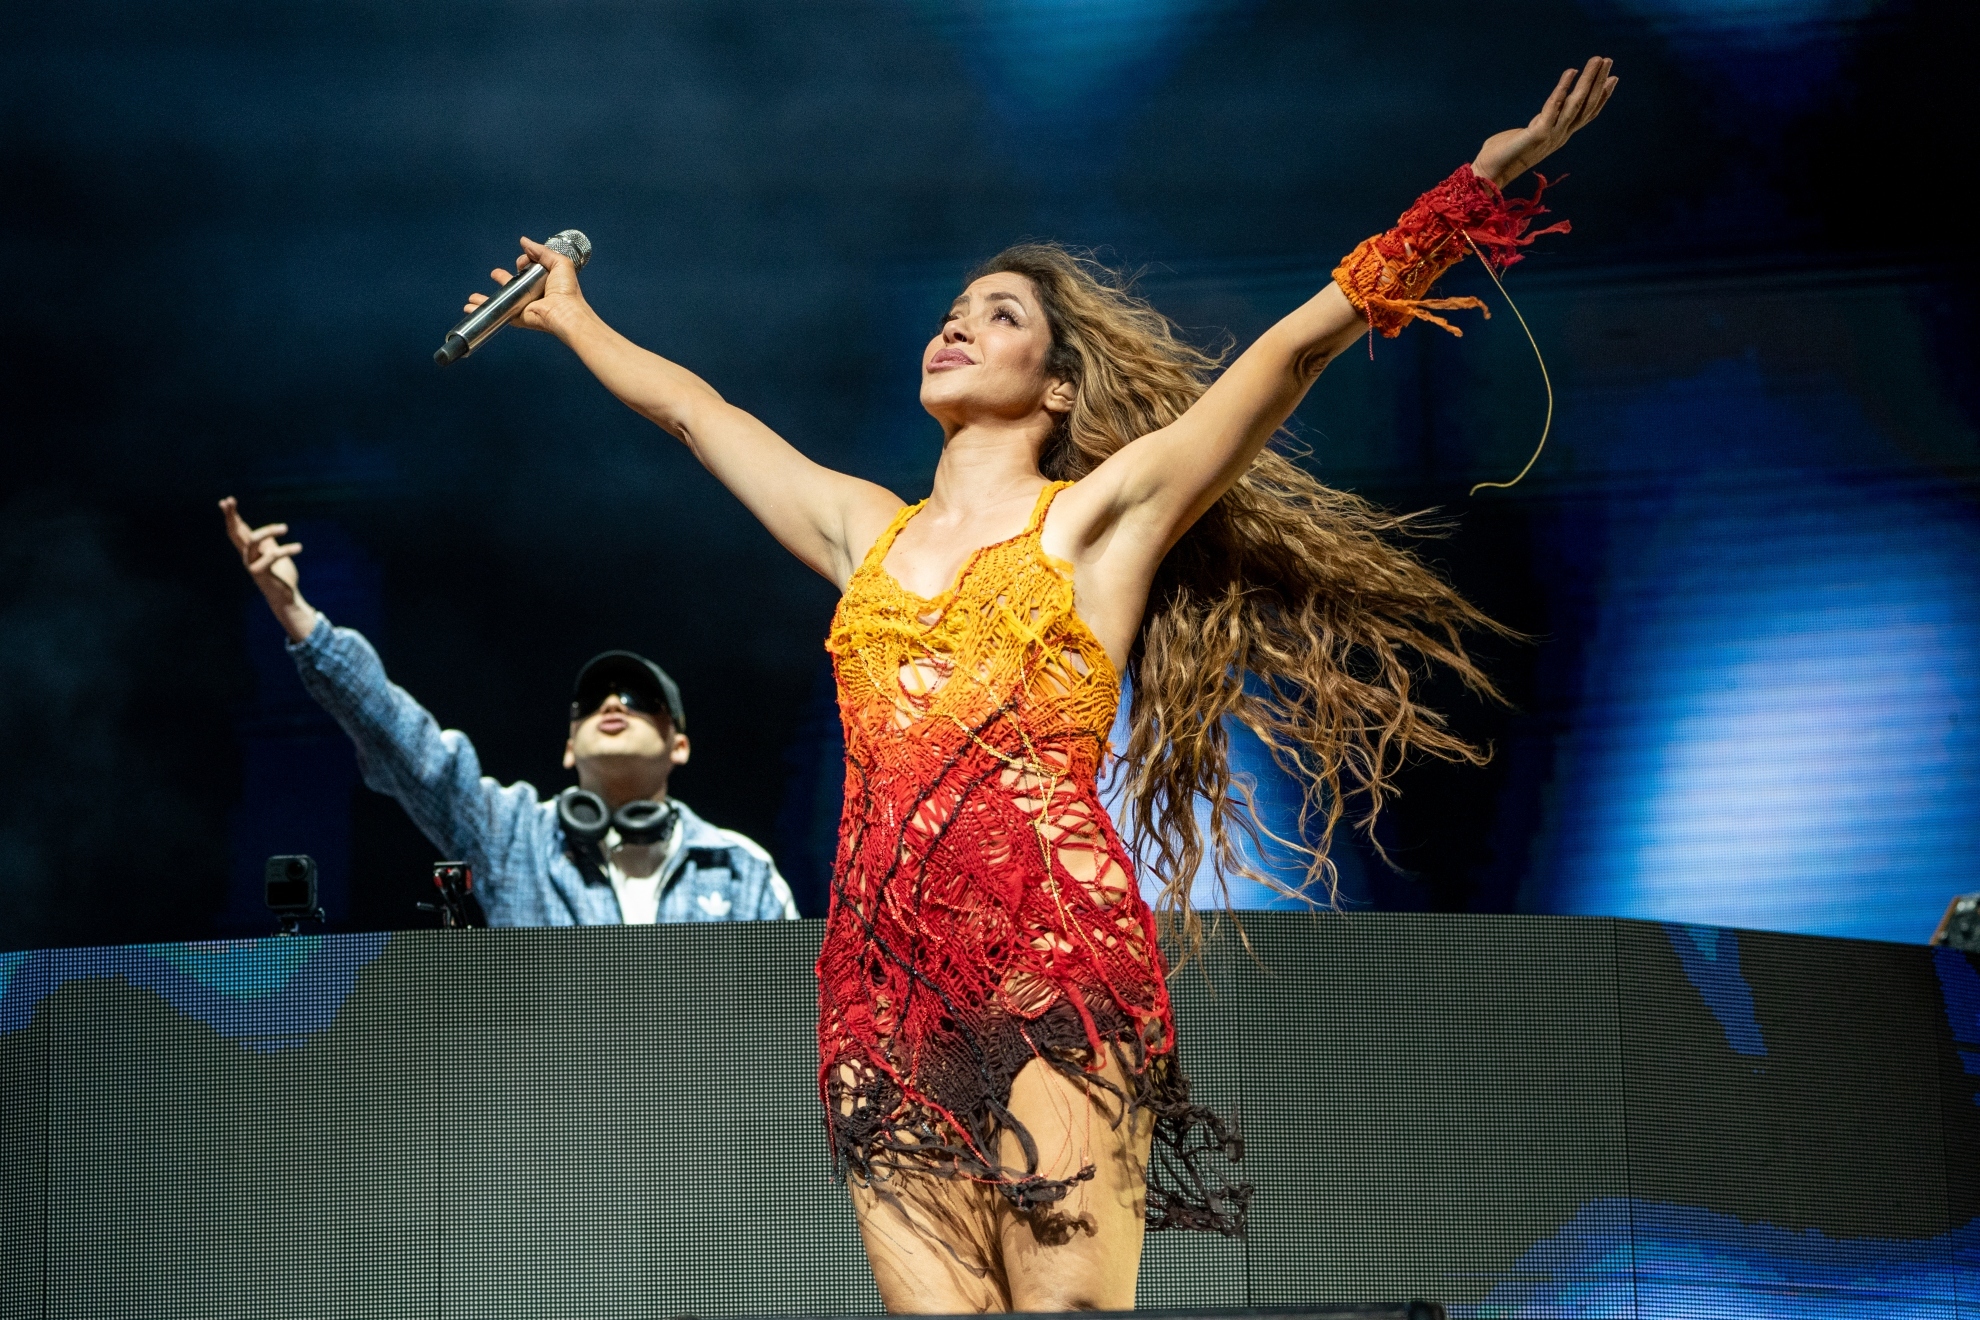 From Barcelona blues to Miami bagic: Shakiras triumphant turnaround